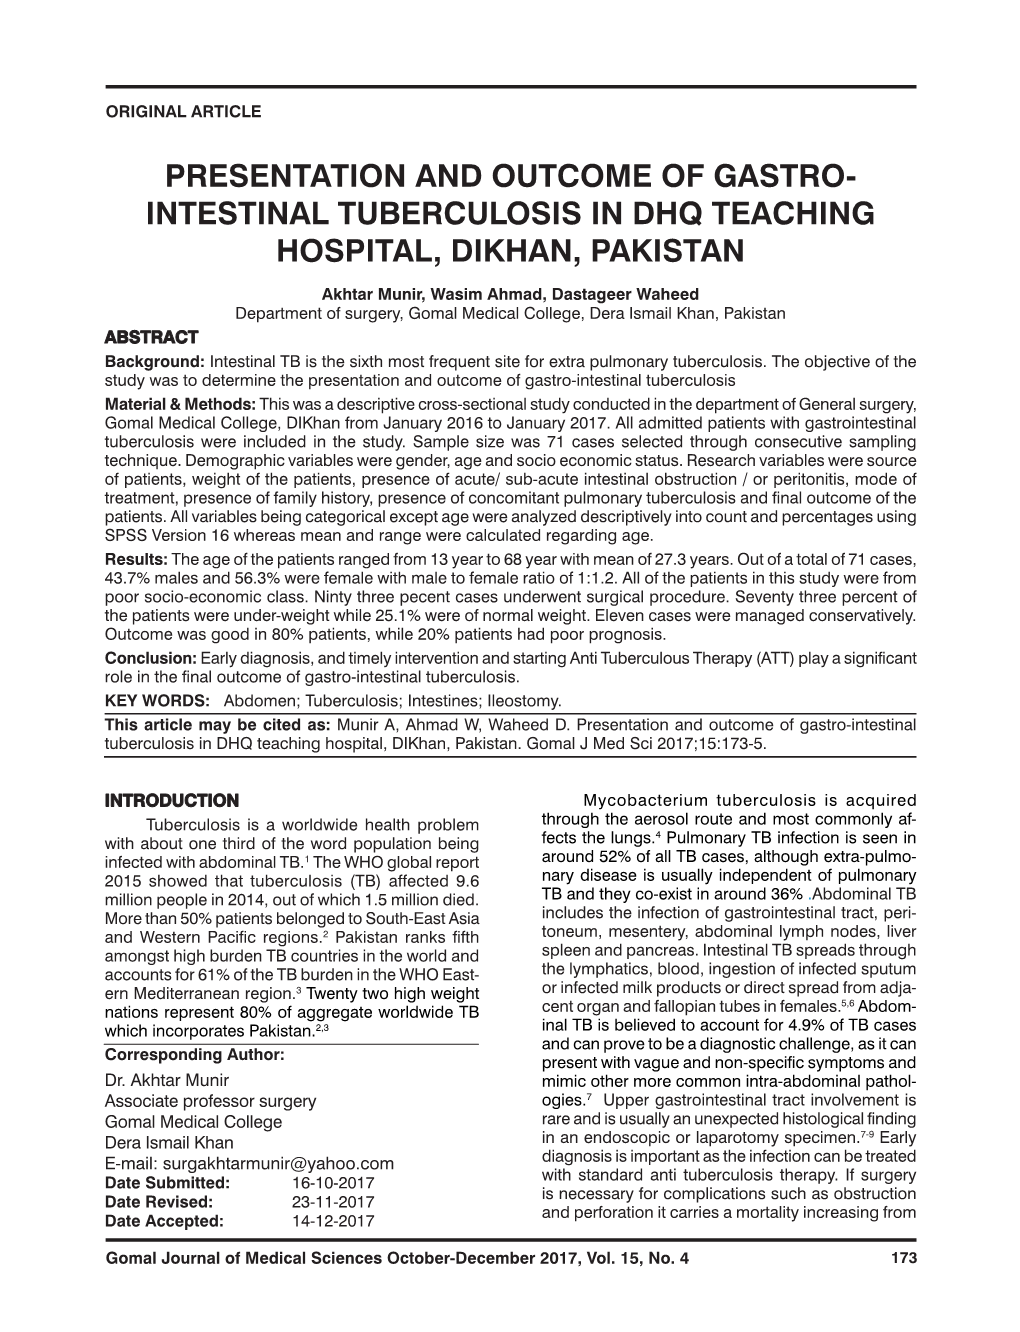 Intestinal Tuberculosis in Dhq Teaching Hospital, Dikhan, Pakistan